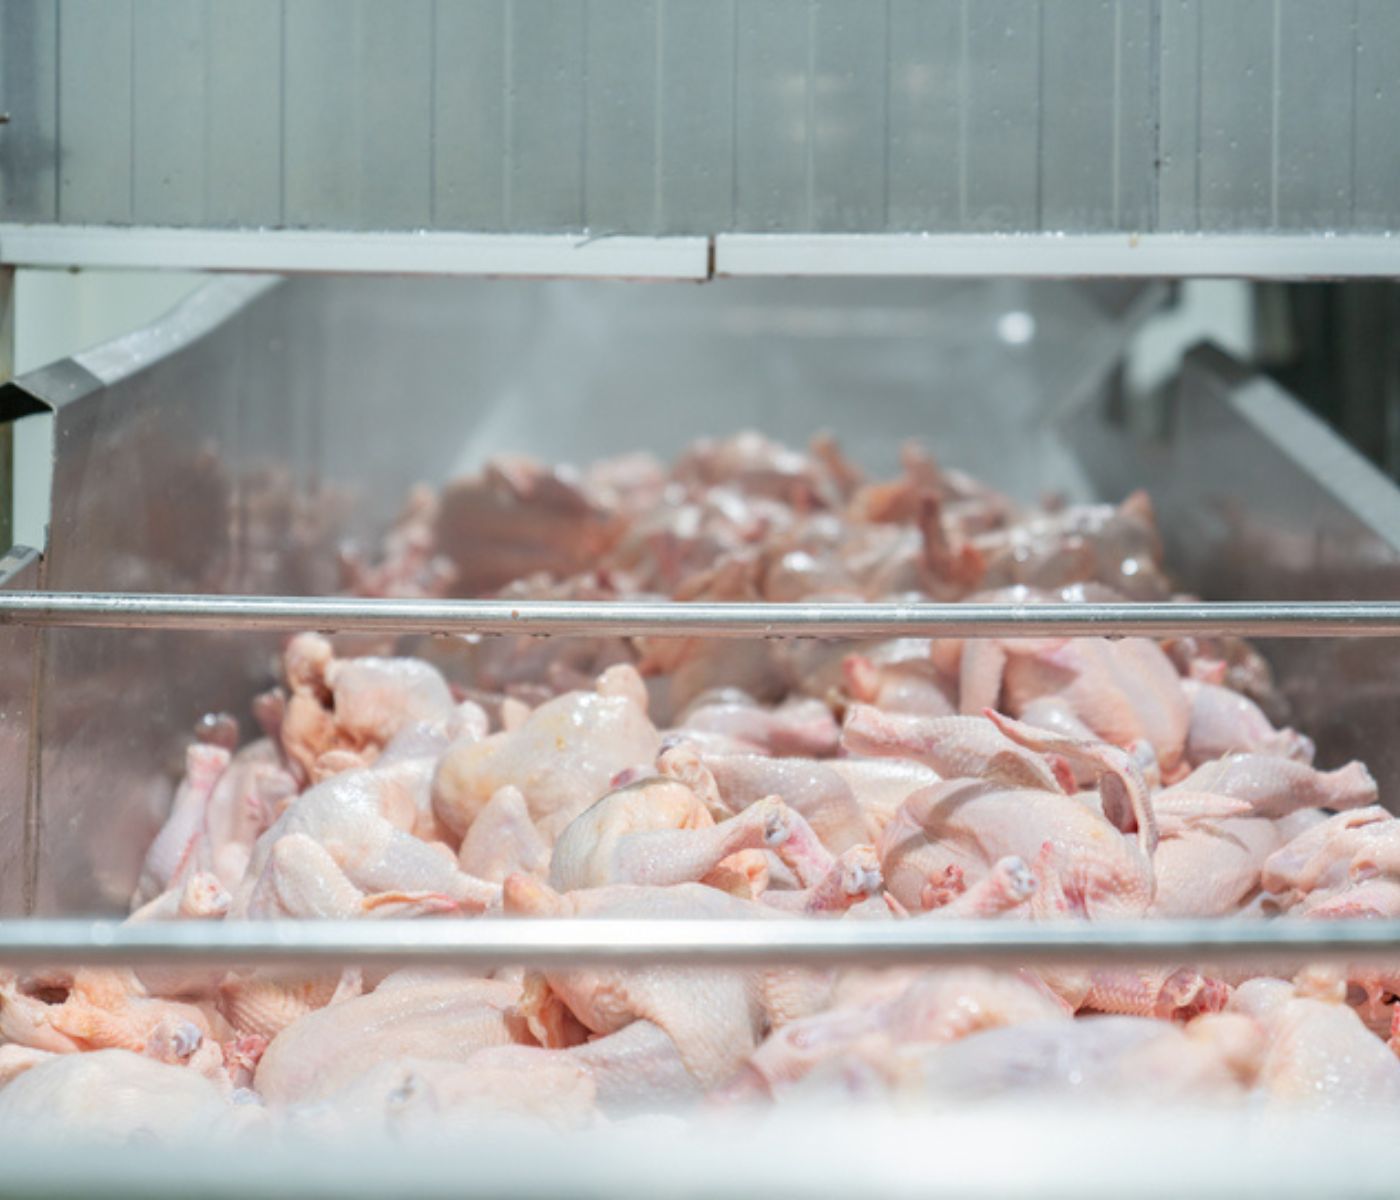 Desinfección microbiológica: Reduce contaminación por patógenos en industria avícola